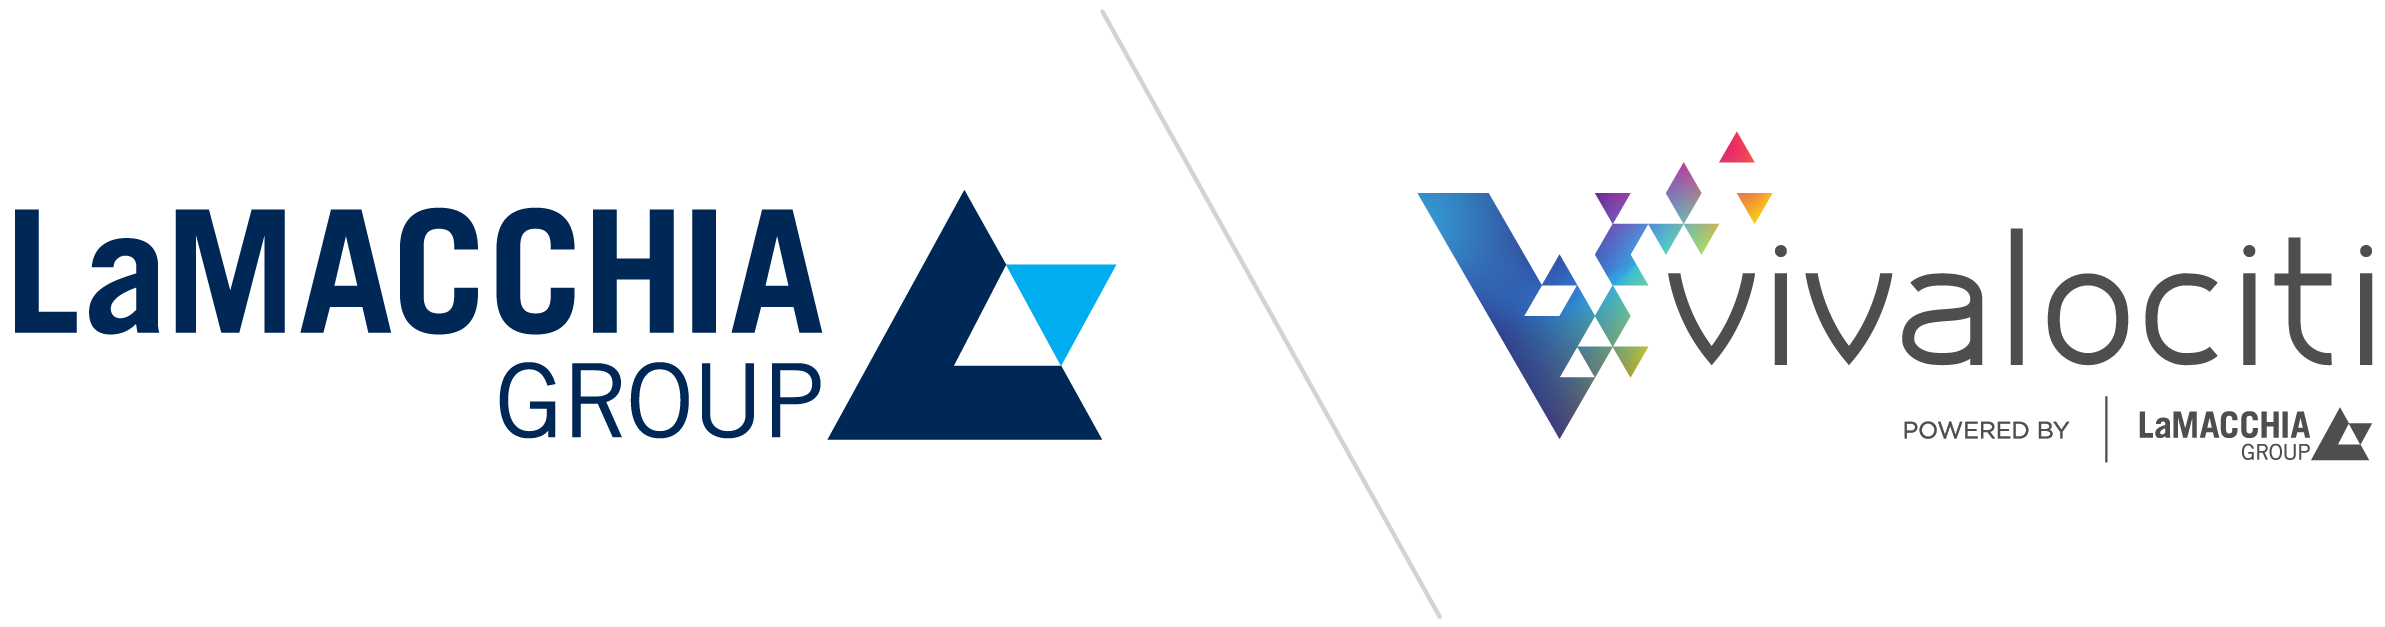 La Macchia Group and Vivalociti logo